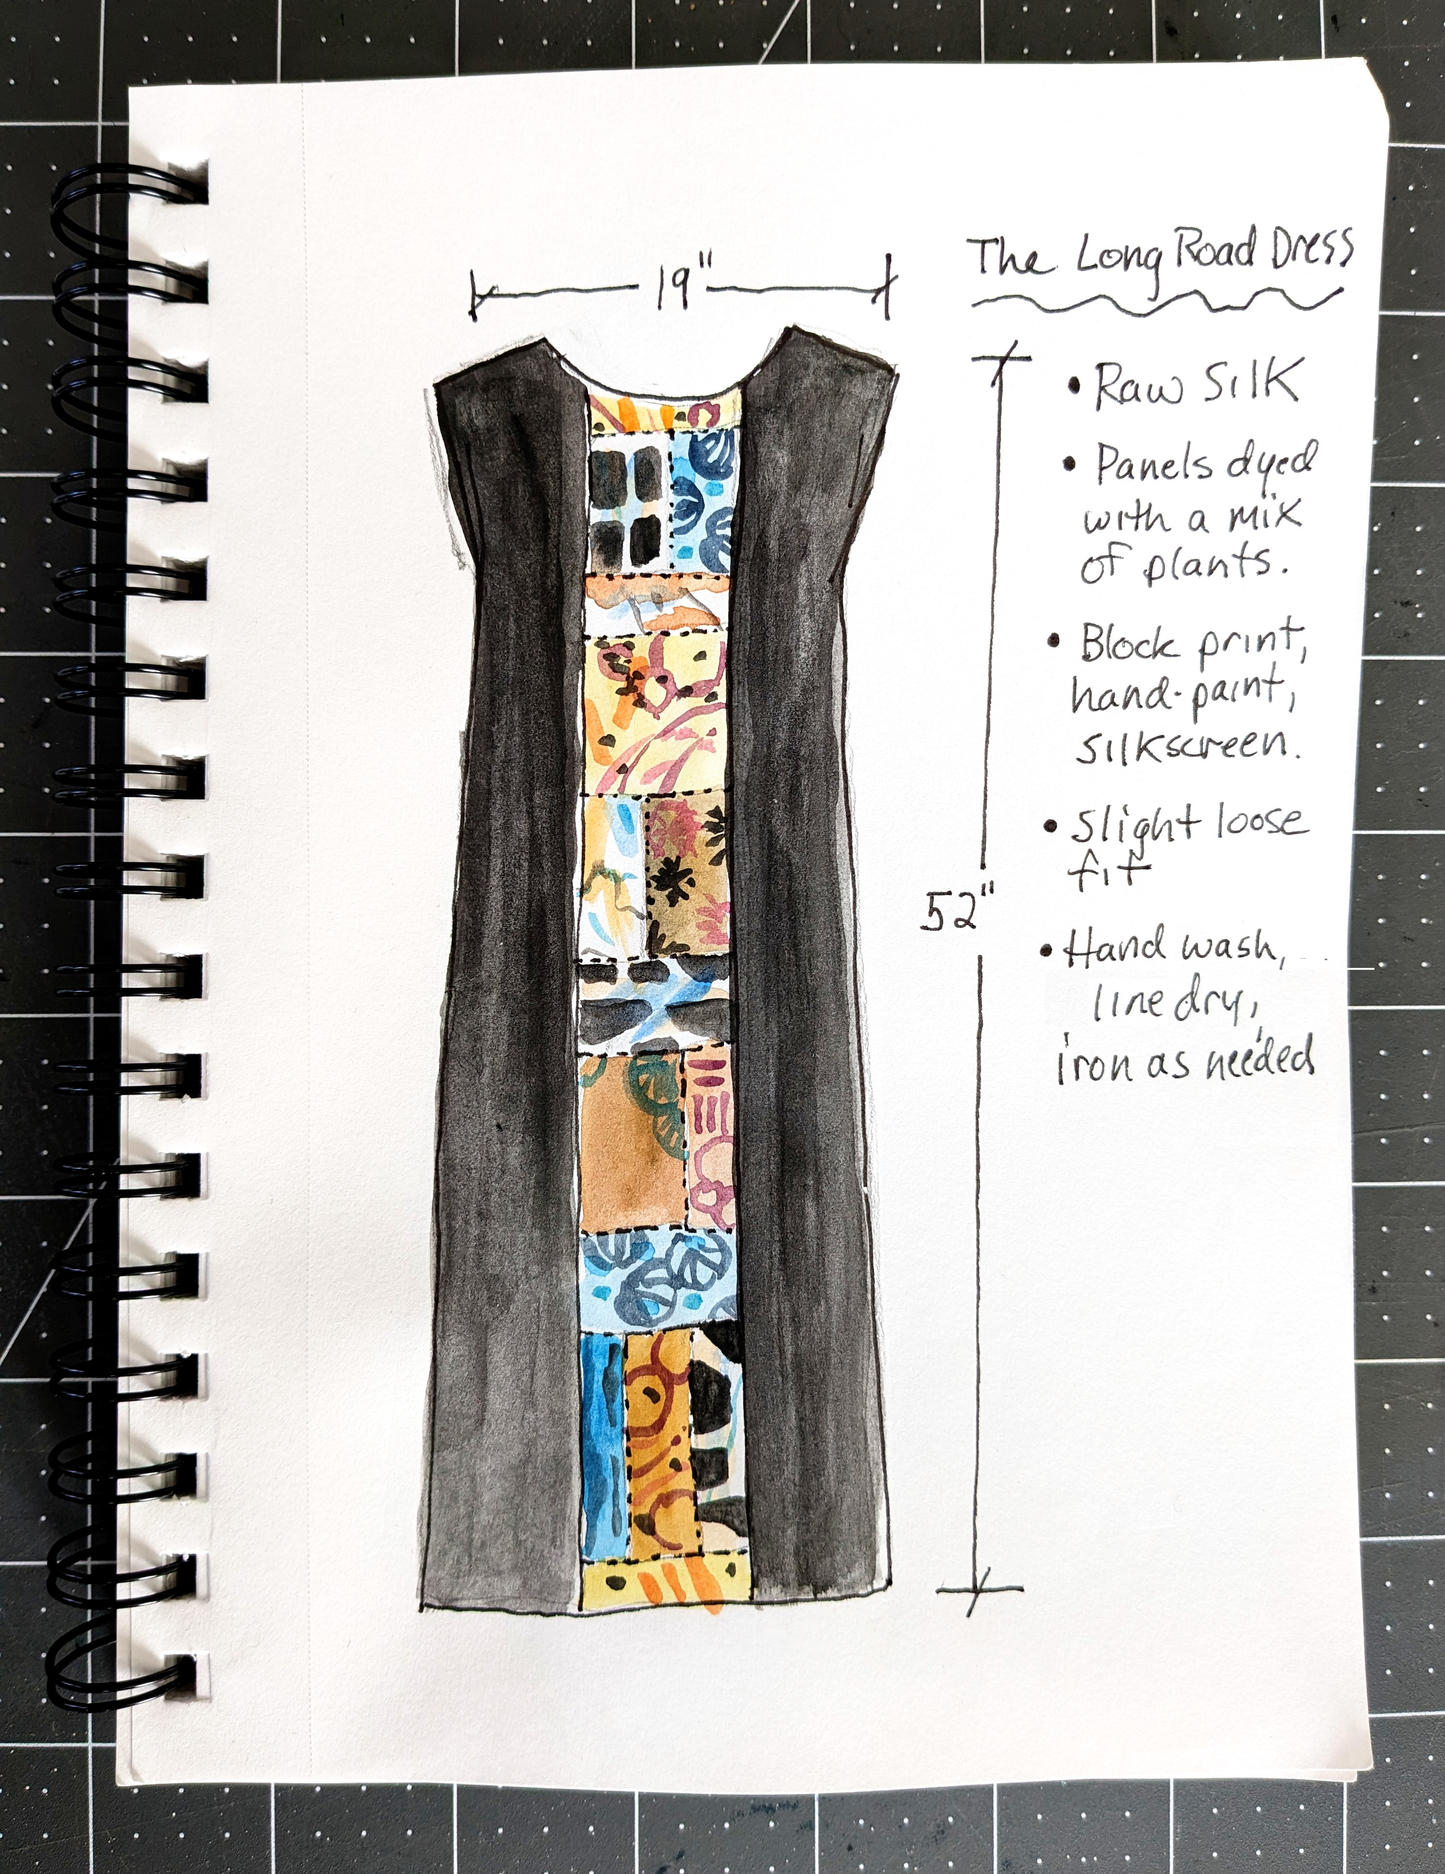 The Long Road Dress